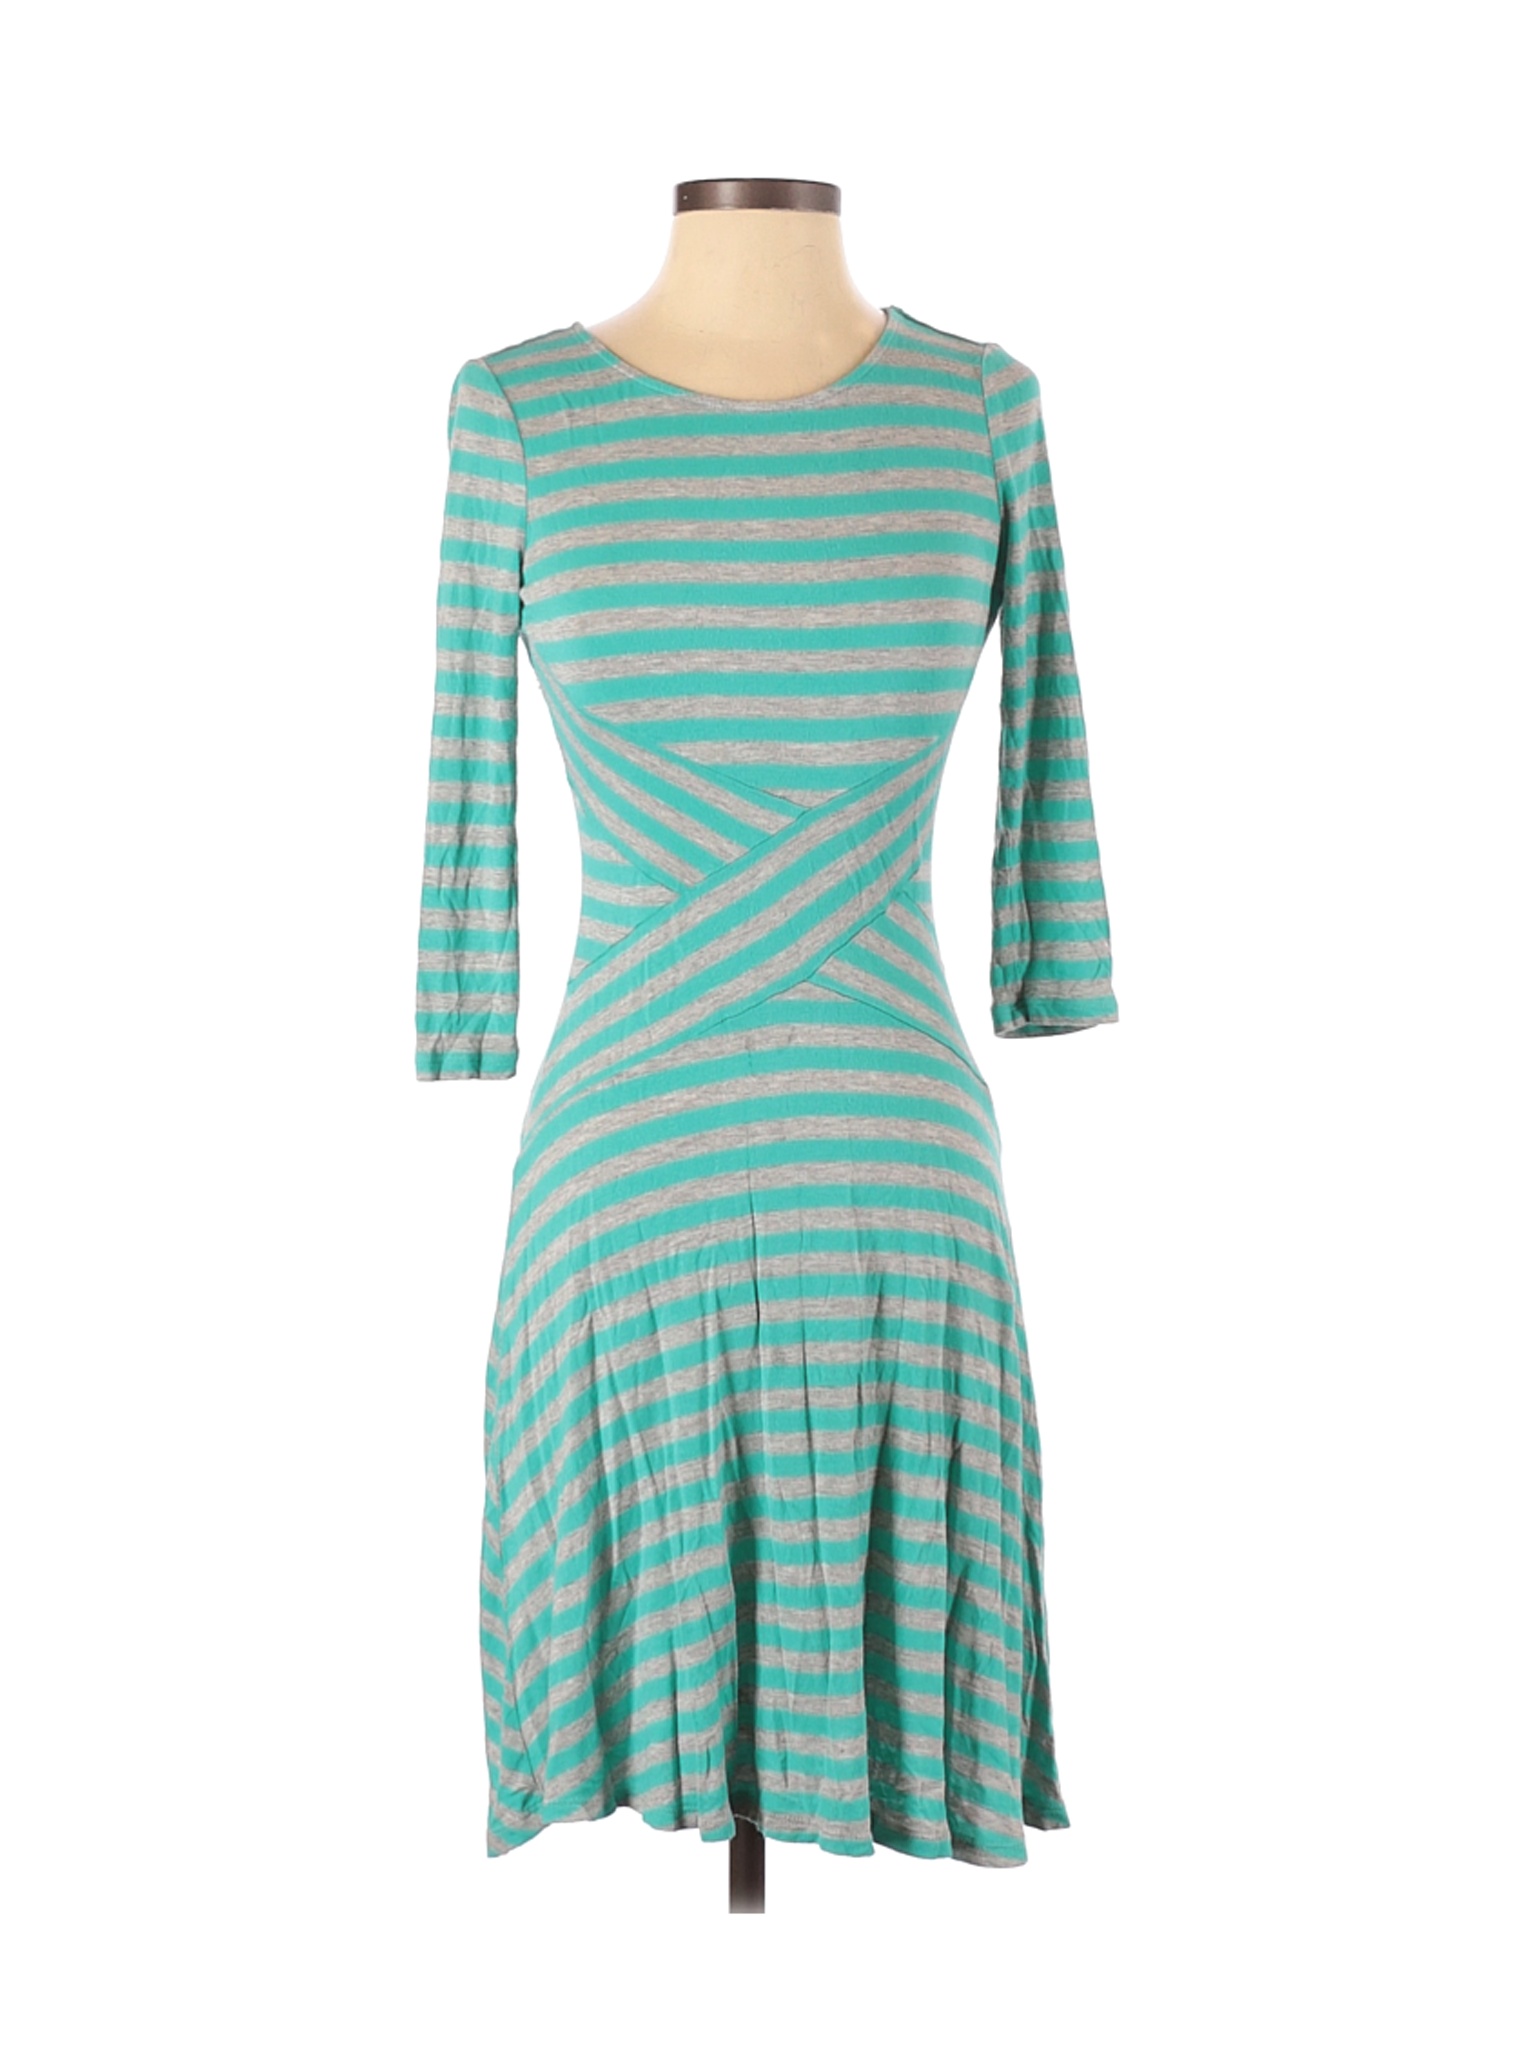 Tacera Women Blue Casual Dress S | eBay